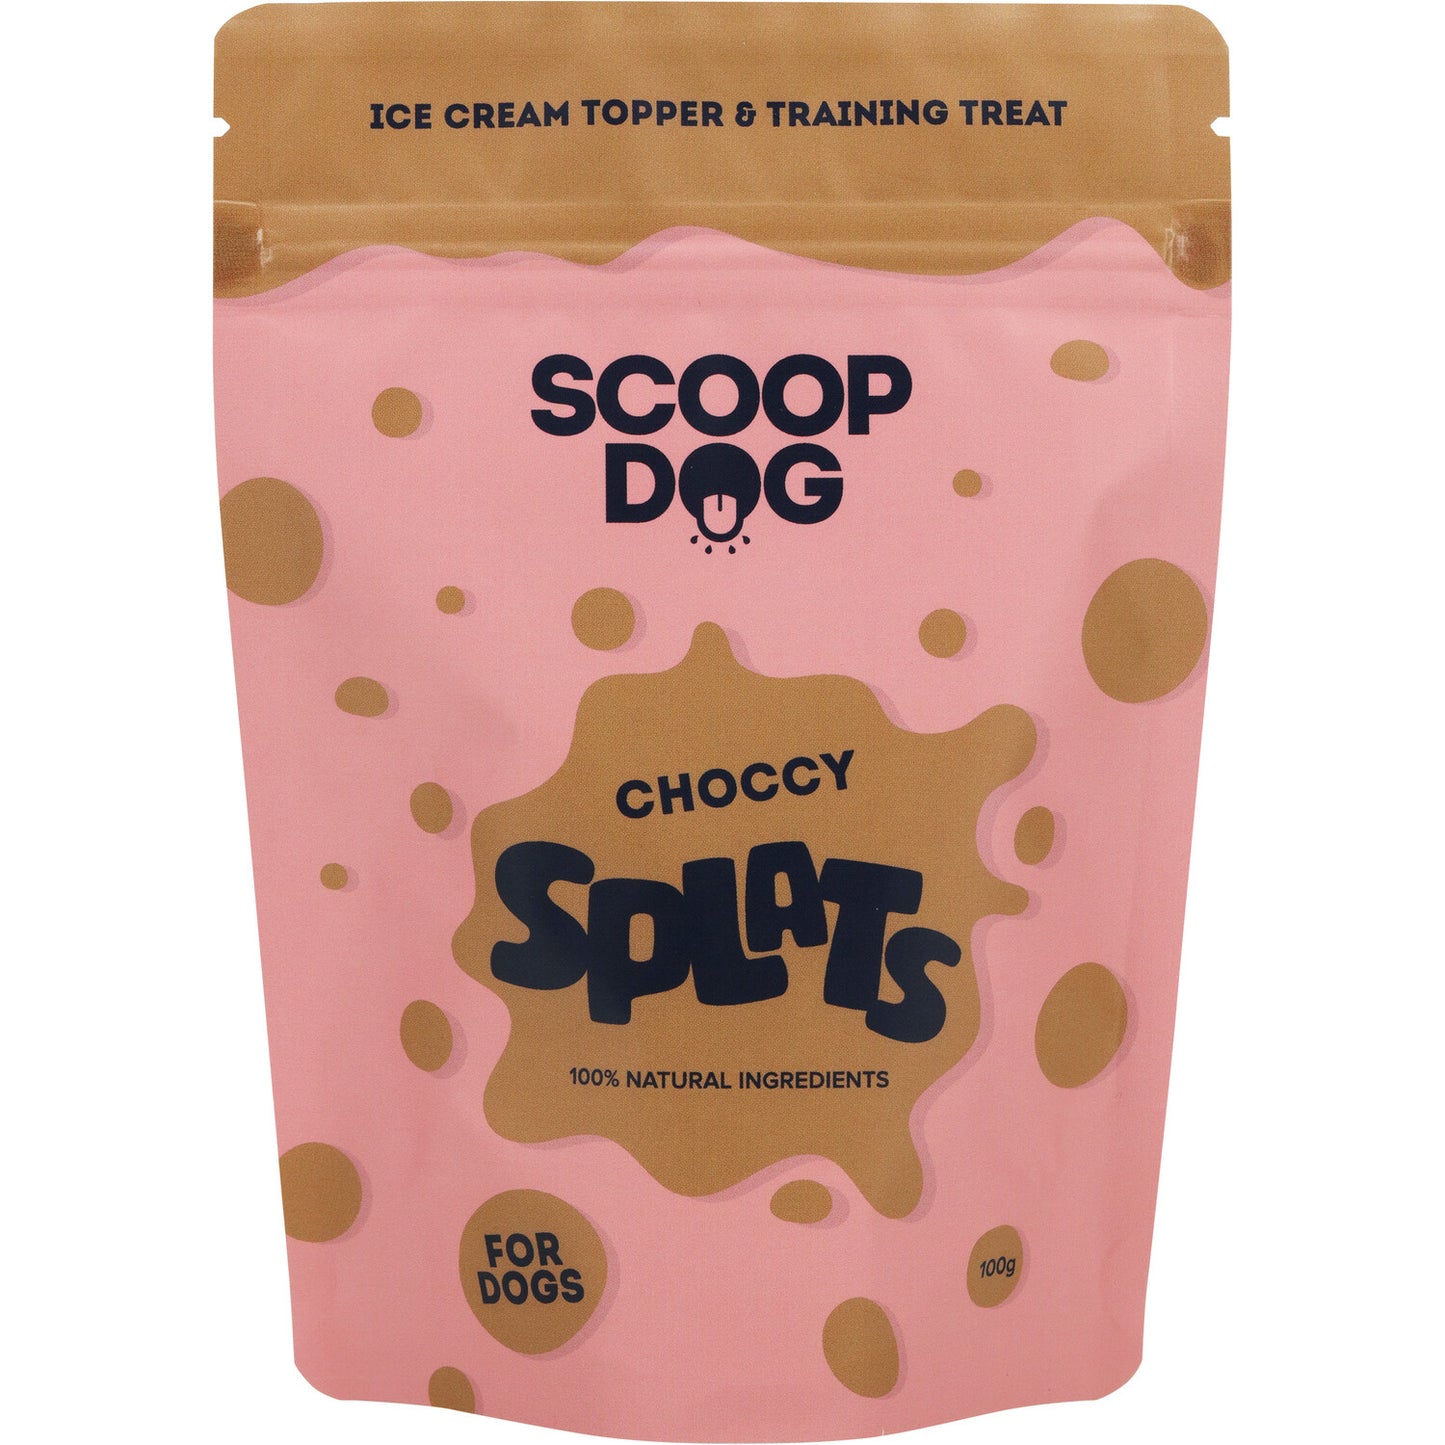 Scoop Dog Splats - Choccy